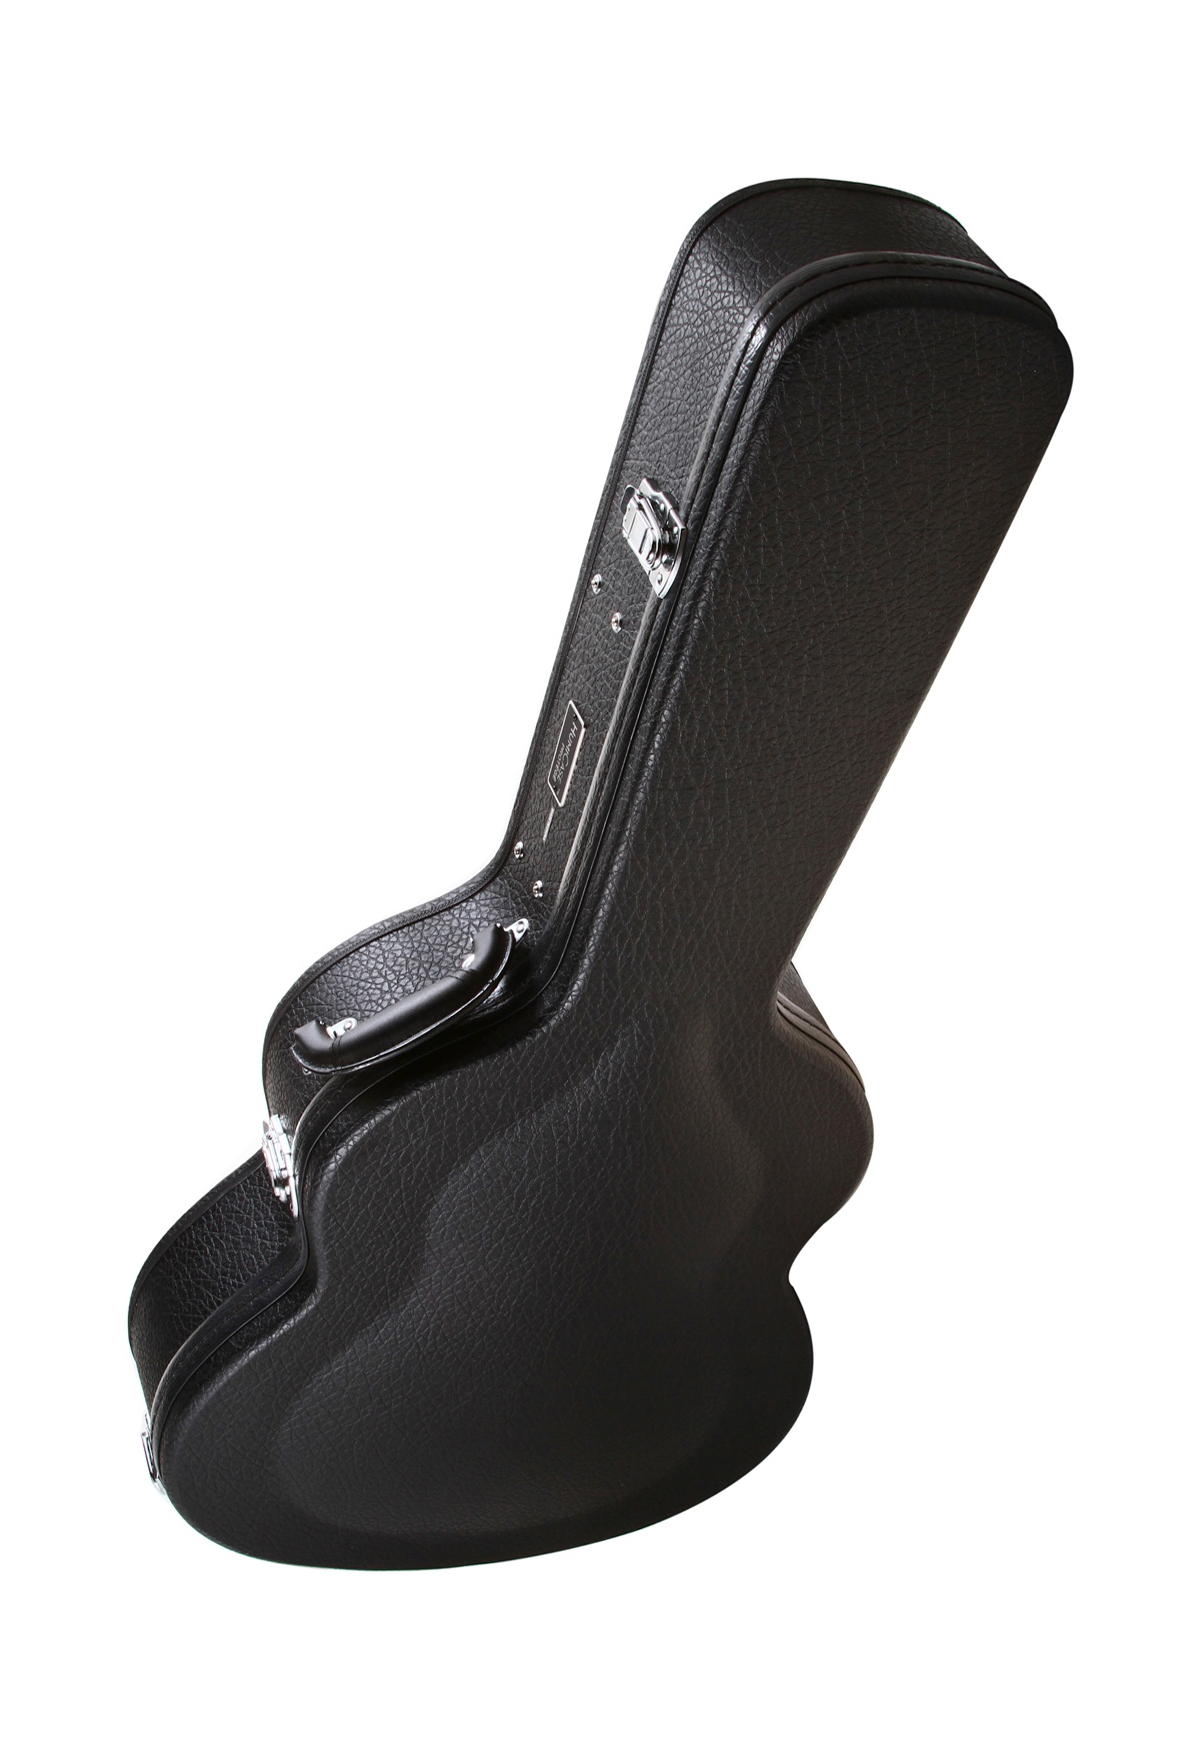 Guitar case Protege thin body 